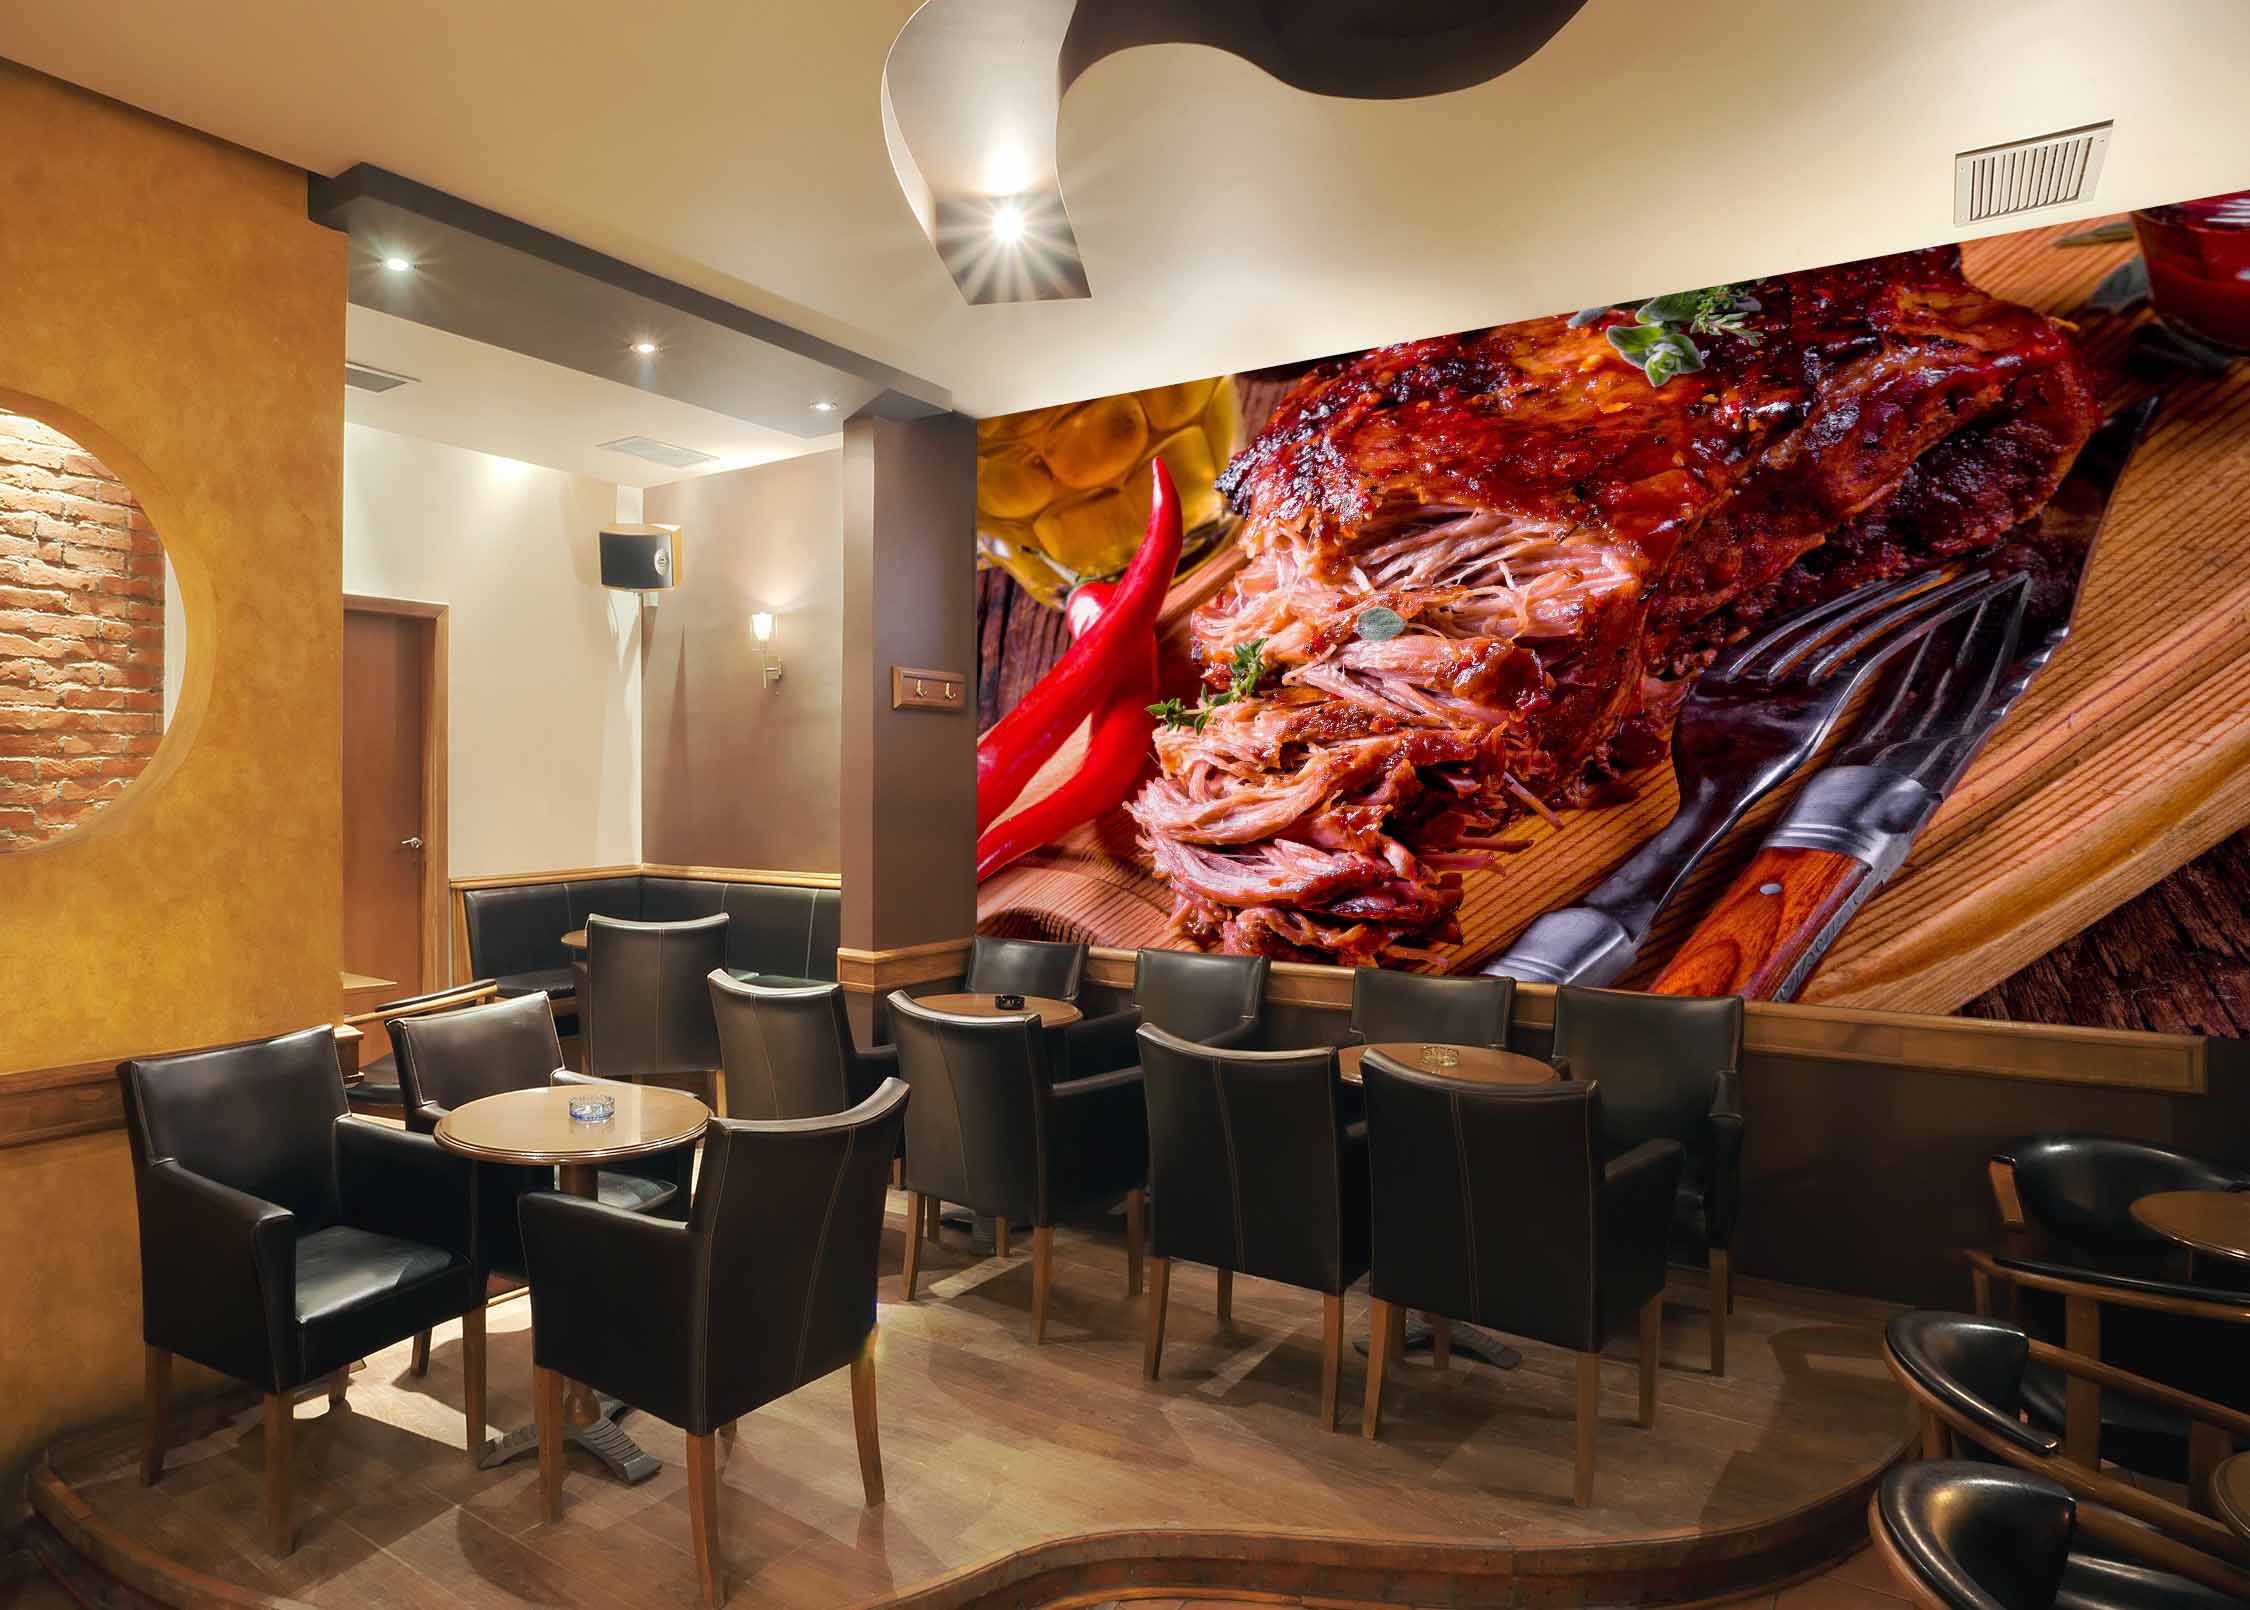 3D Grill Kebab Shop BBQ 319 Wall Mural Wall Murals Commercial